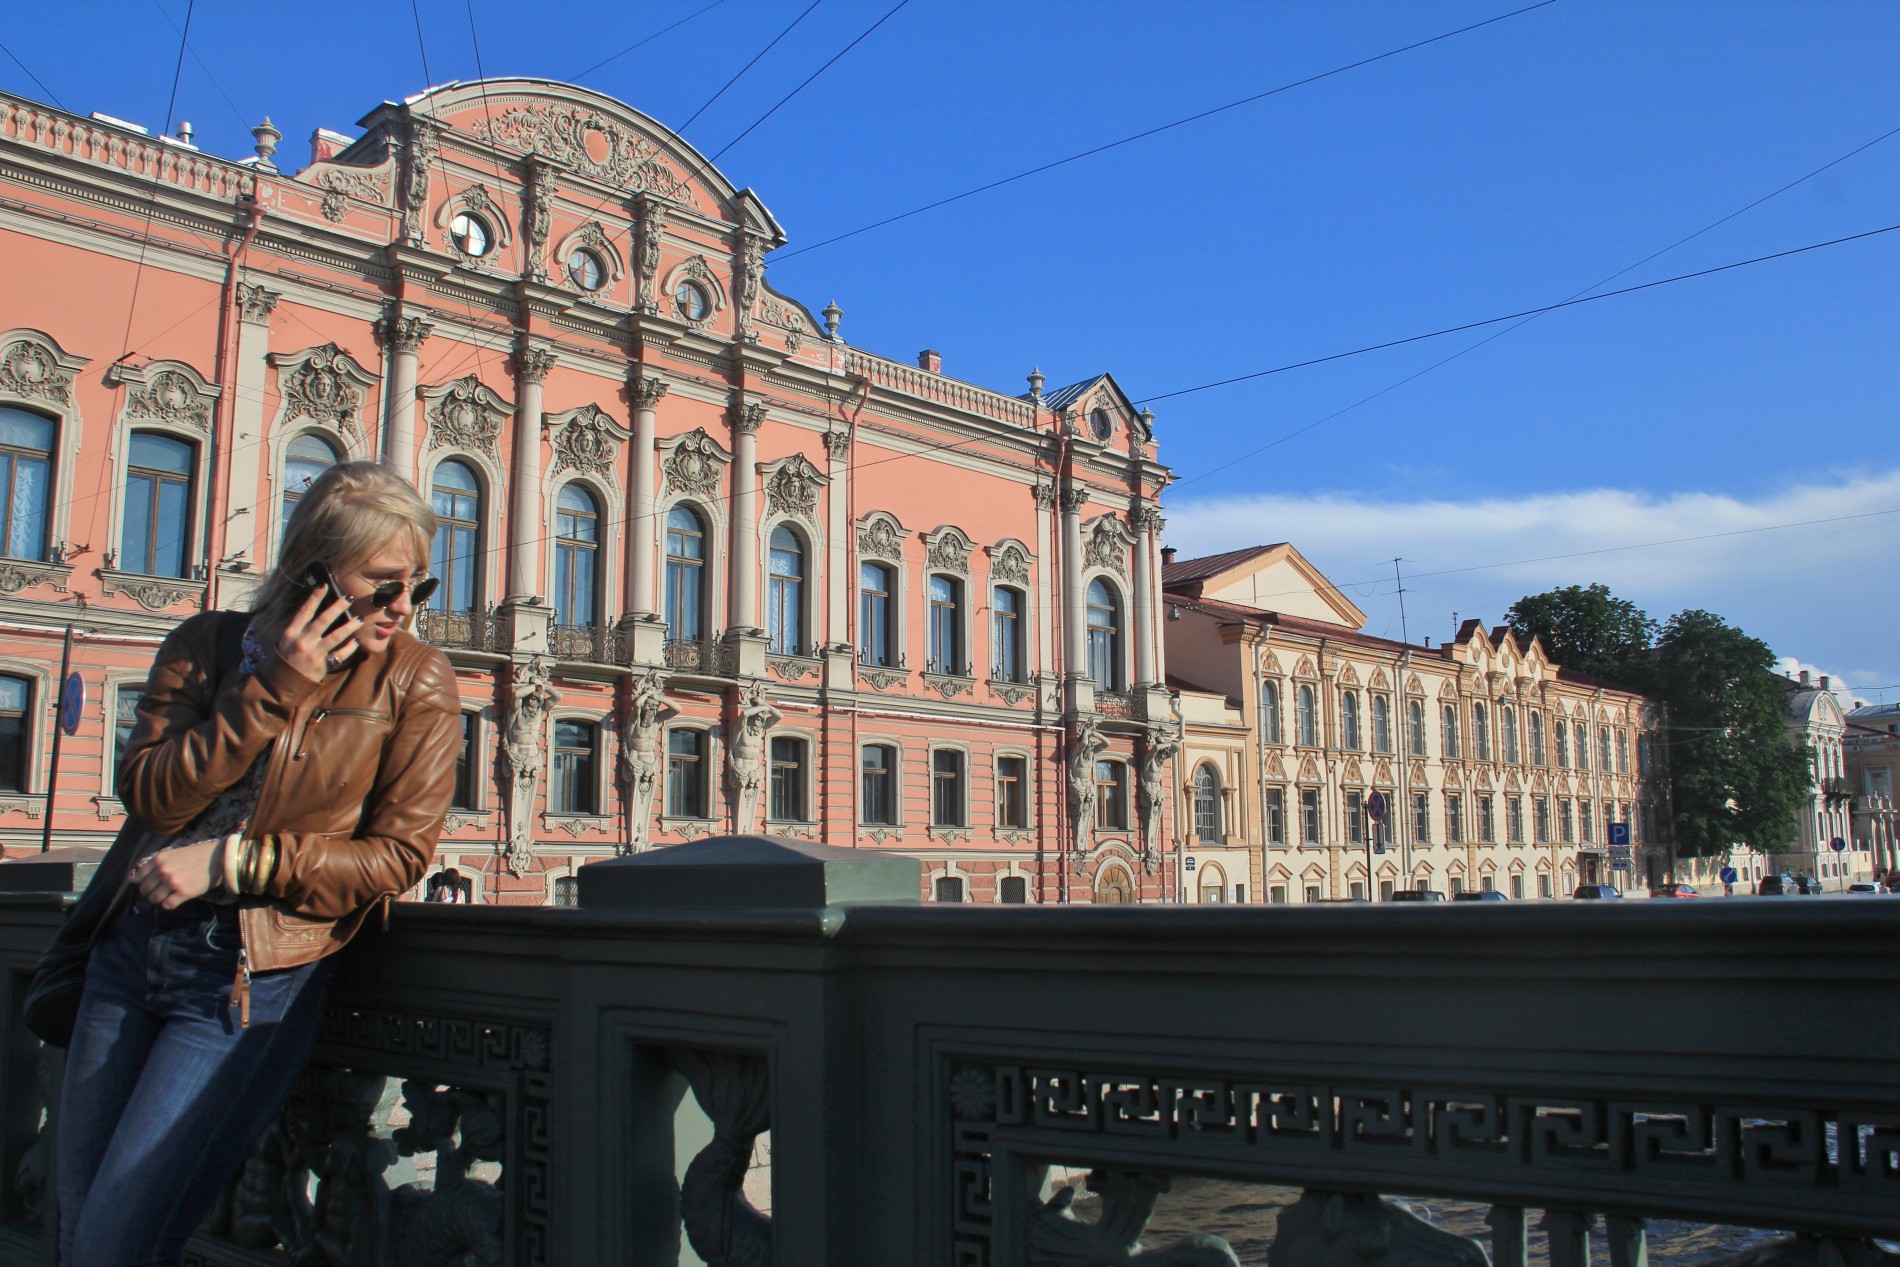 Nastya chats on a phone on Anichkov Bridge in St. Petersburg, Russia.